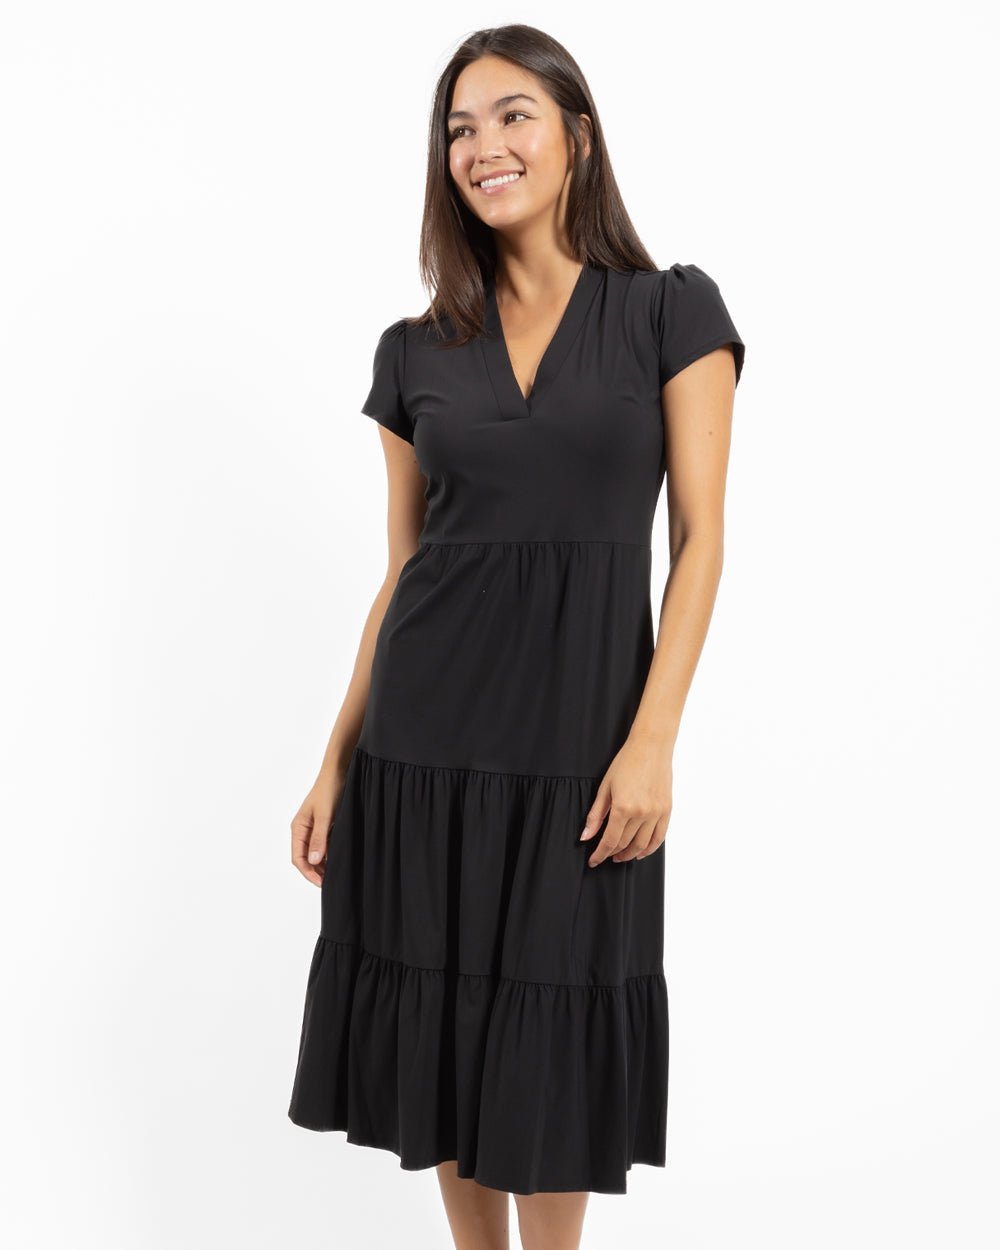 Jude Connally - Libby Dress Jude Cloth - Black - Shorely Chic Boutique